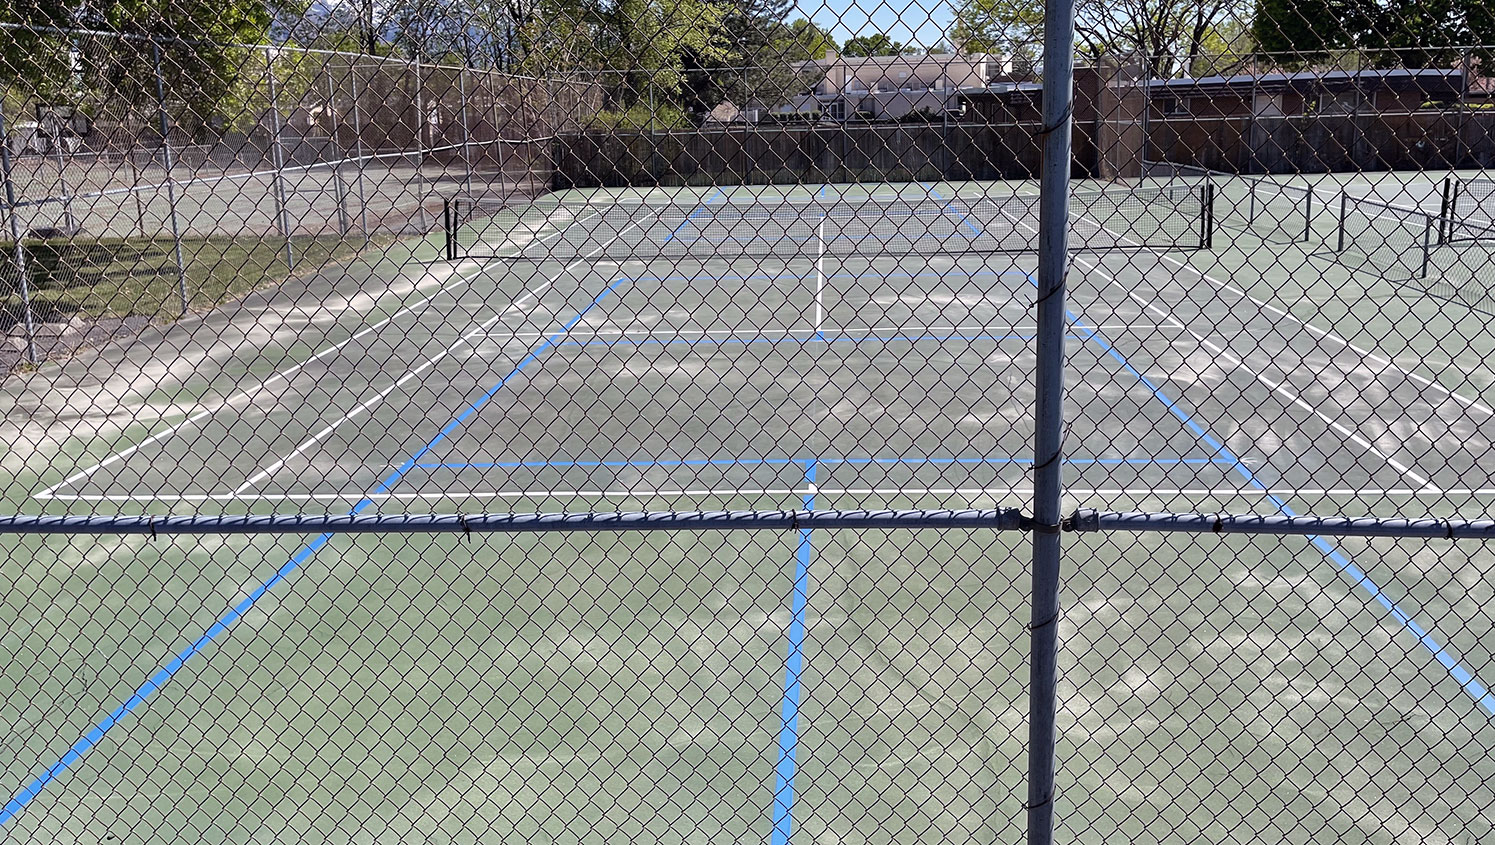 new pickleball court markings at Evergreen Swim and Tennis Club in Salt Lake City, UT